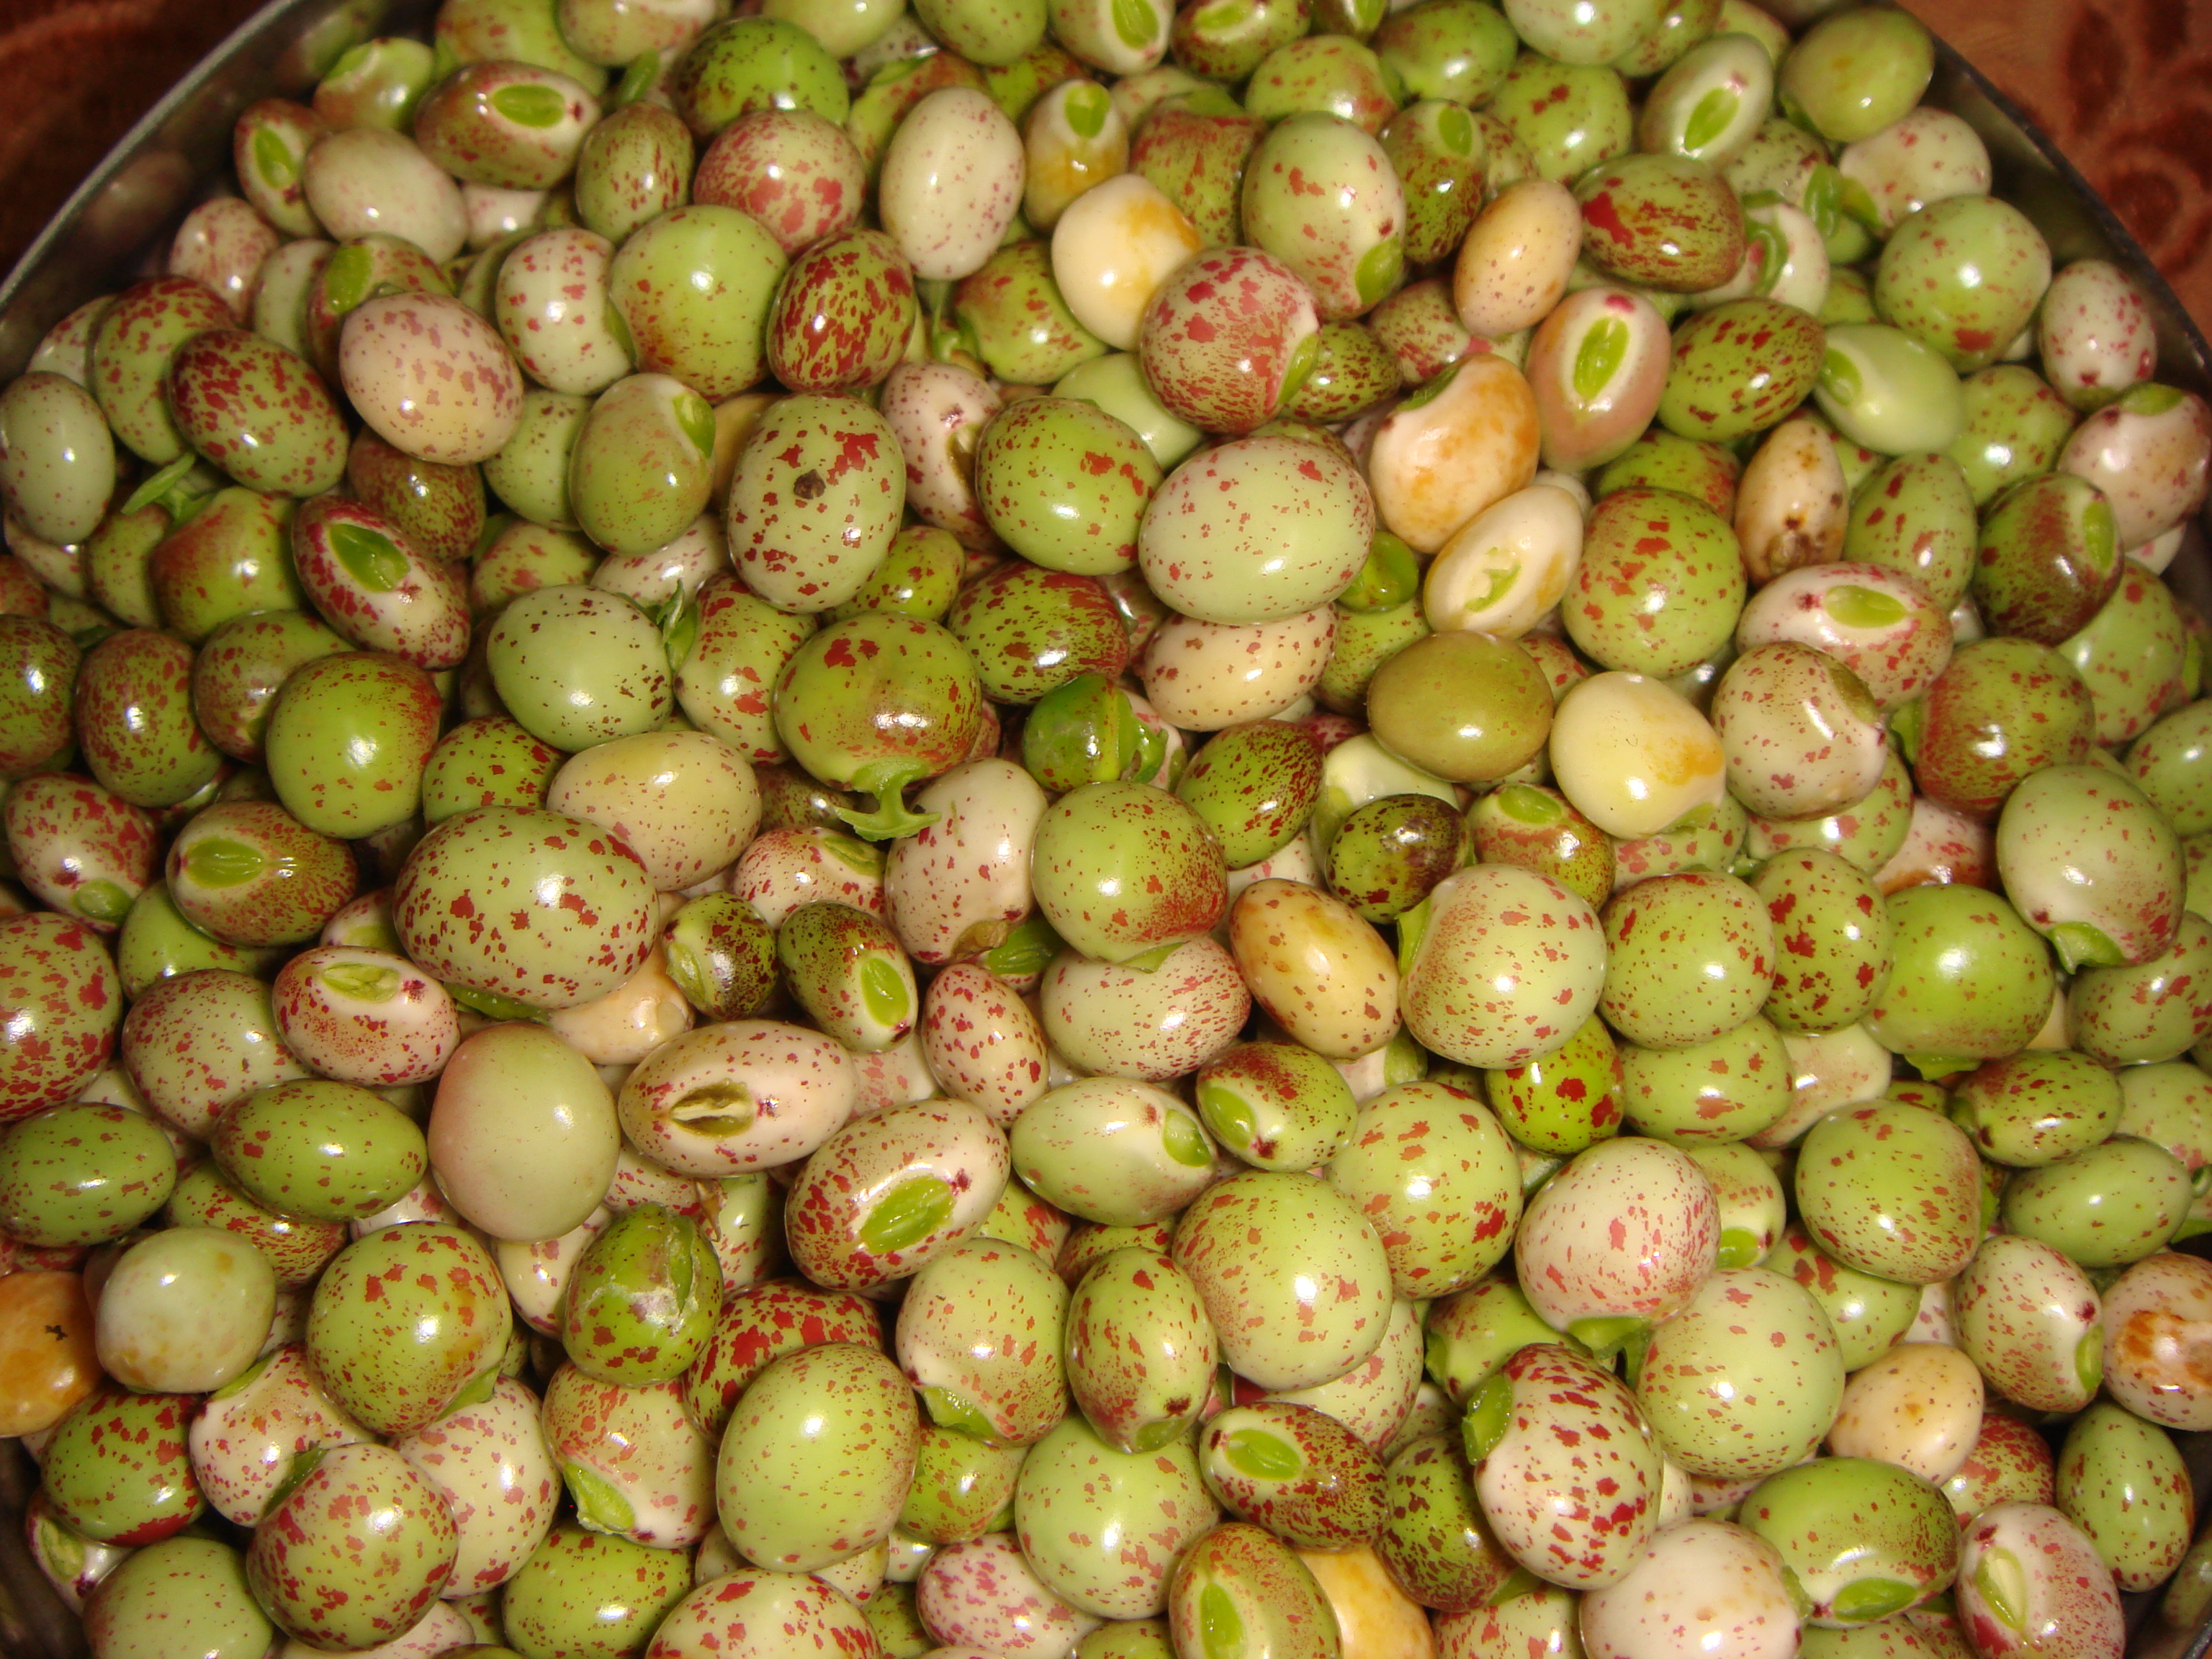 Pile of green peas photo